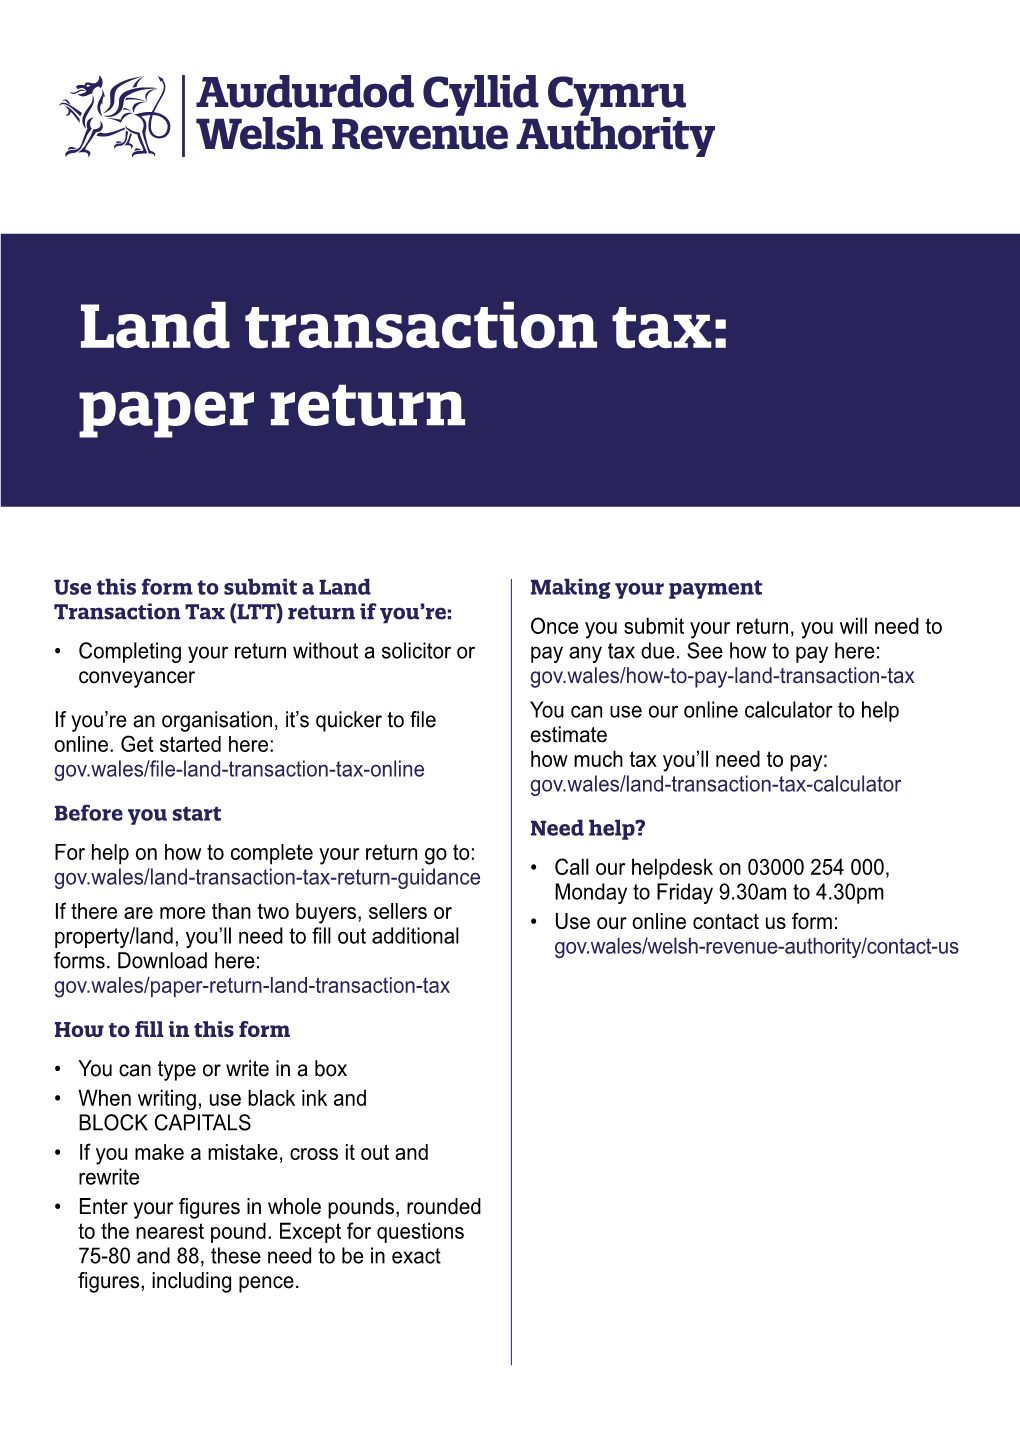 Land Transaction Tax: Paper Return